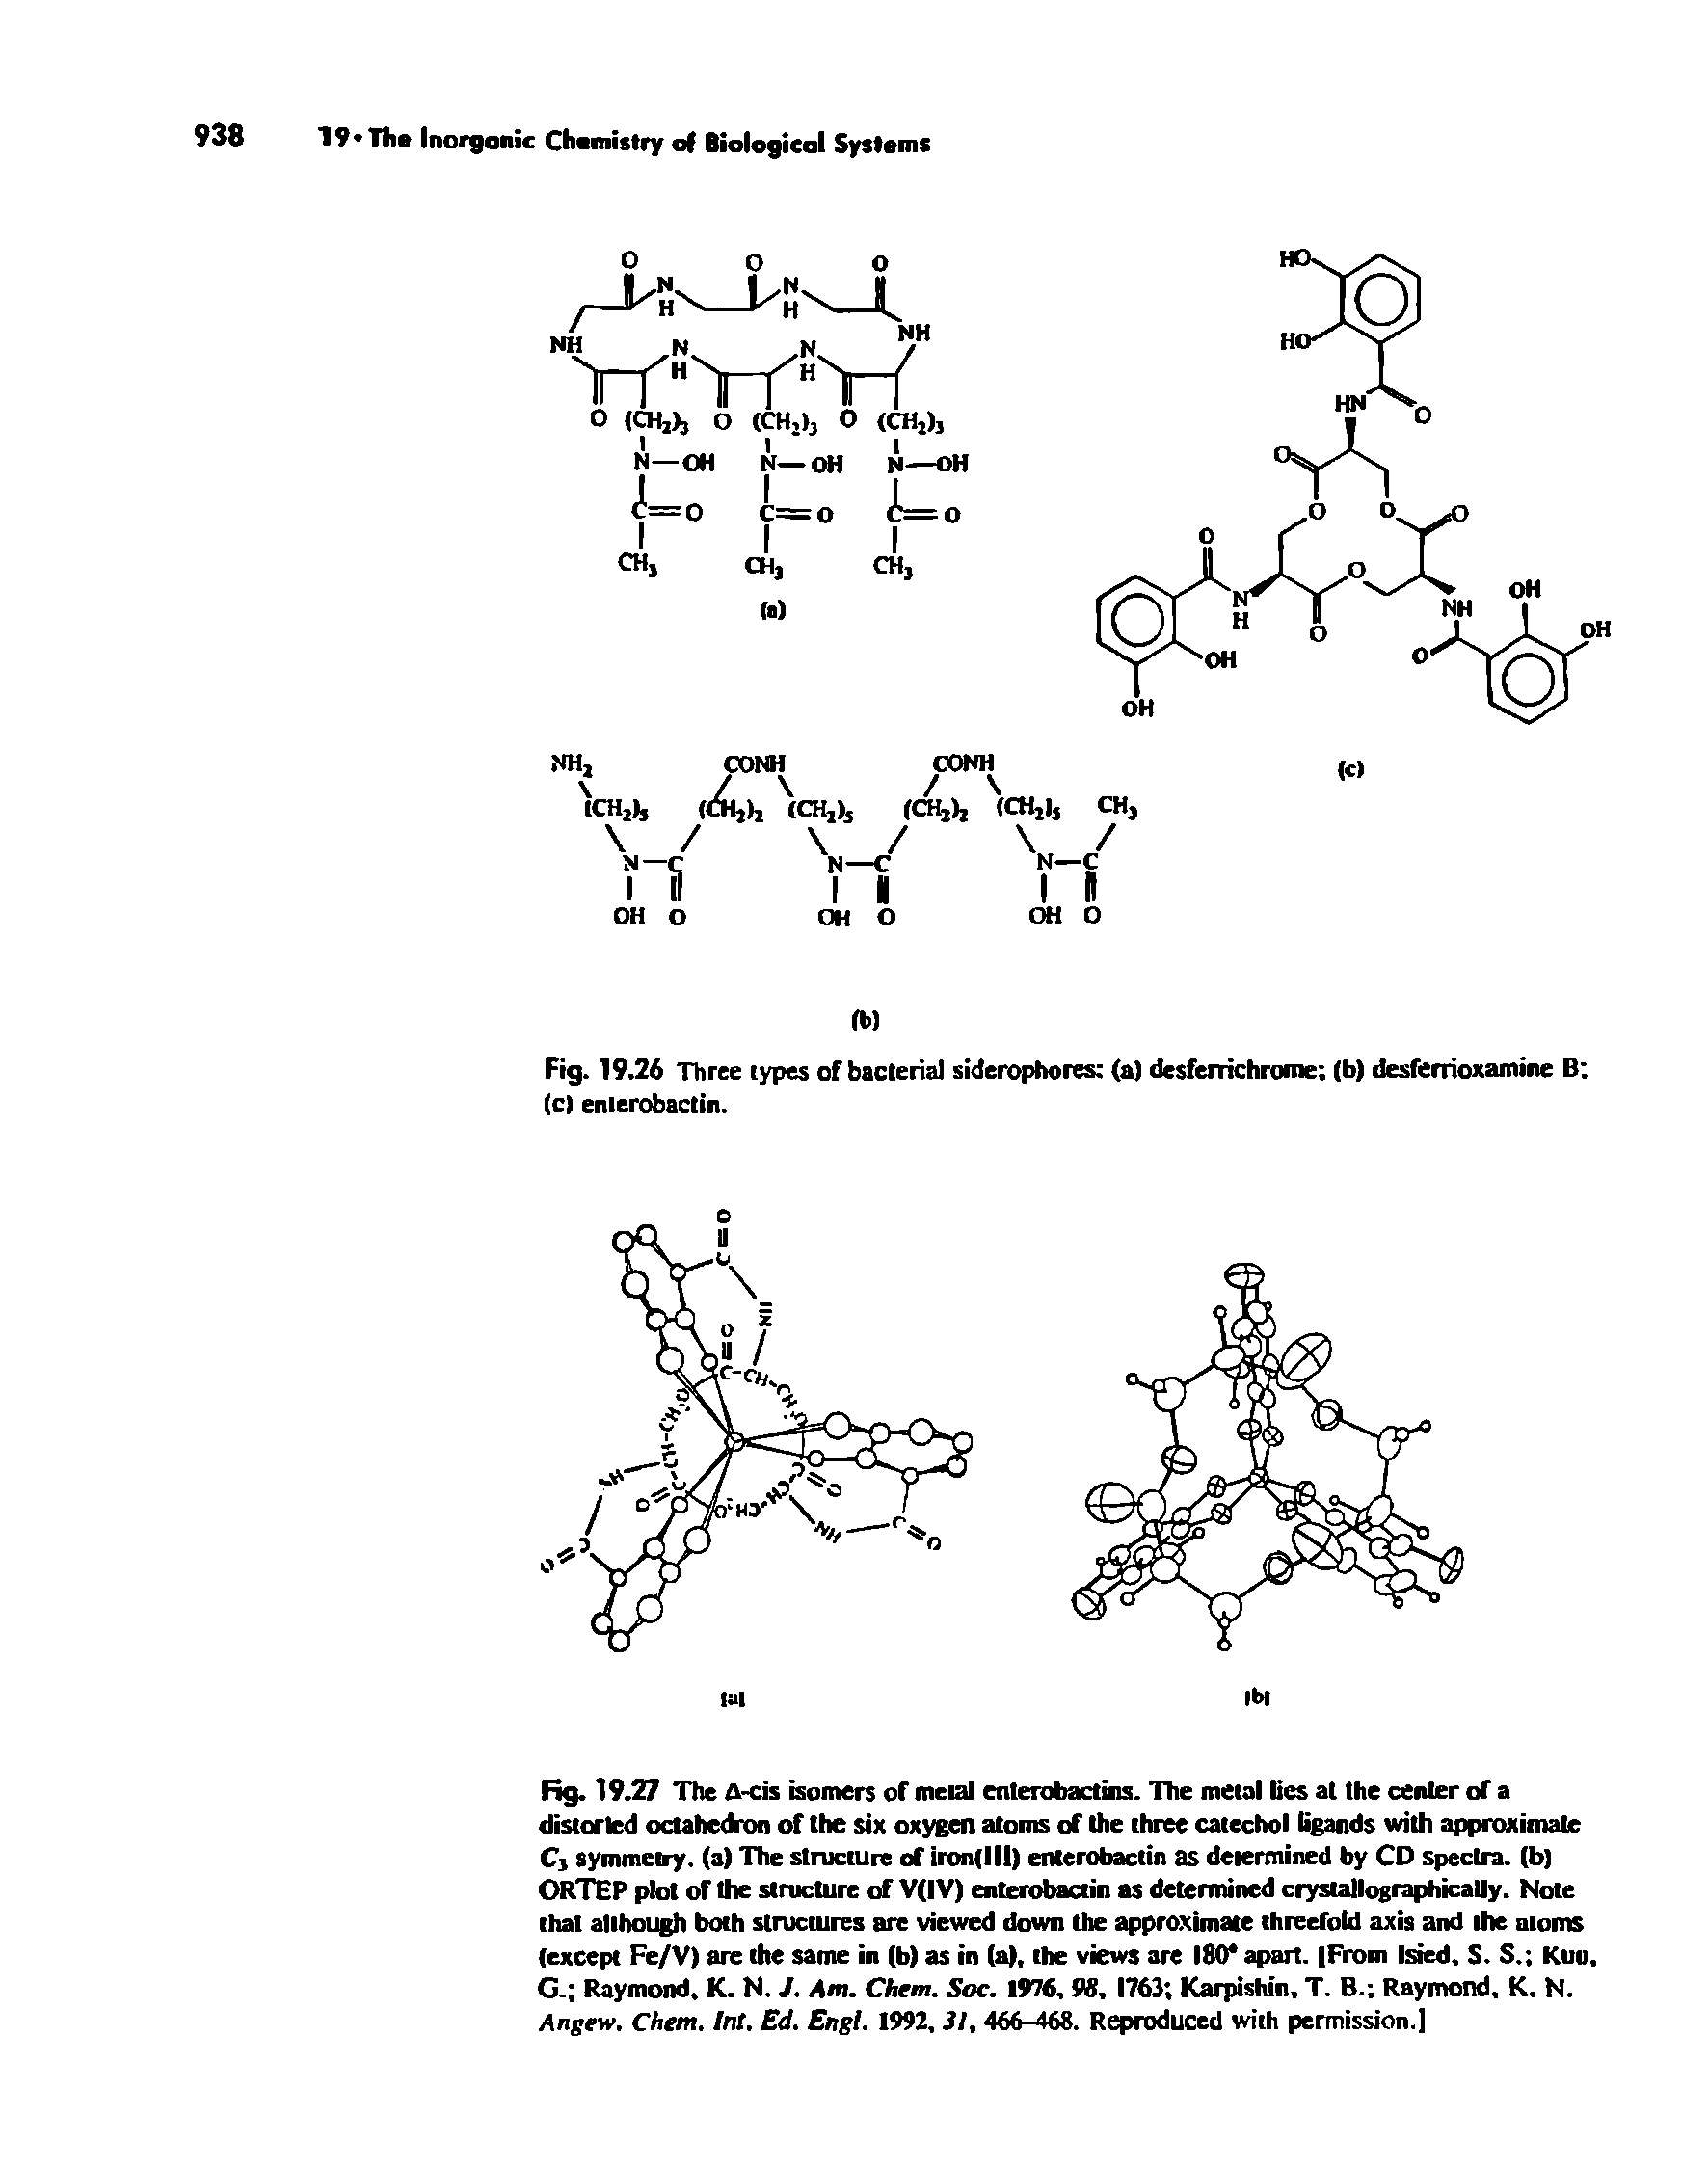 Fig. 19.26 Three types of bacterial siderophores (a) desferrichrome (b) desferrioxamine B (cl enierobactin.